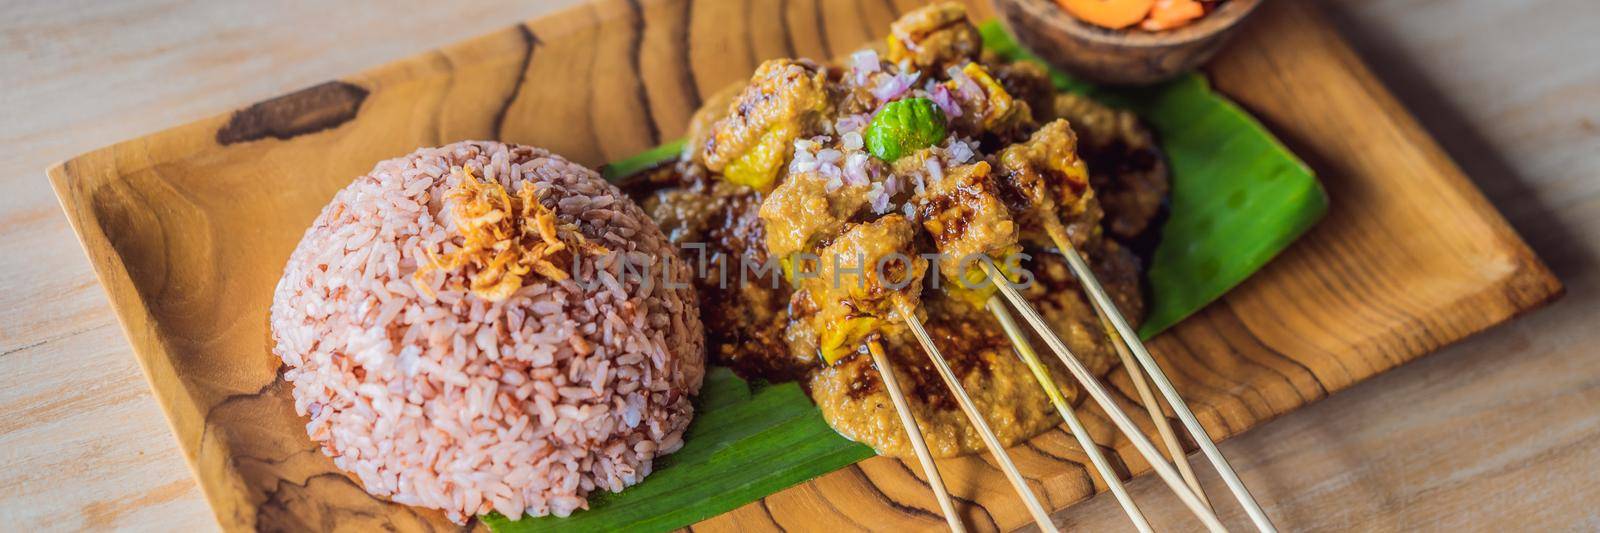 Indonesian lunch set menu, rice, vegetables, tempe BANNER, LONG FORMAT by galitskaya